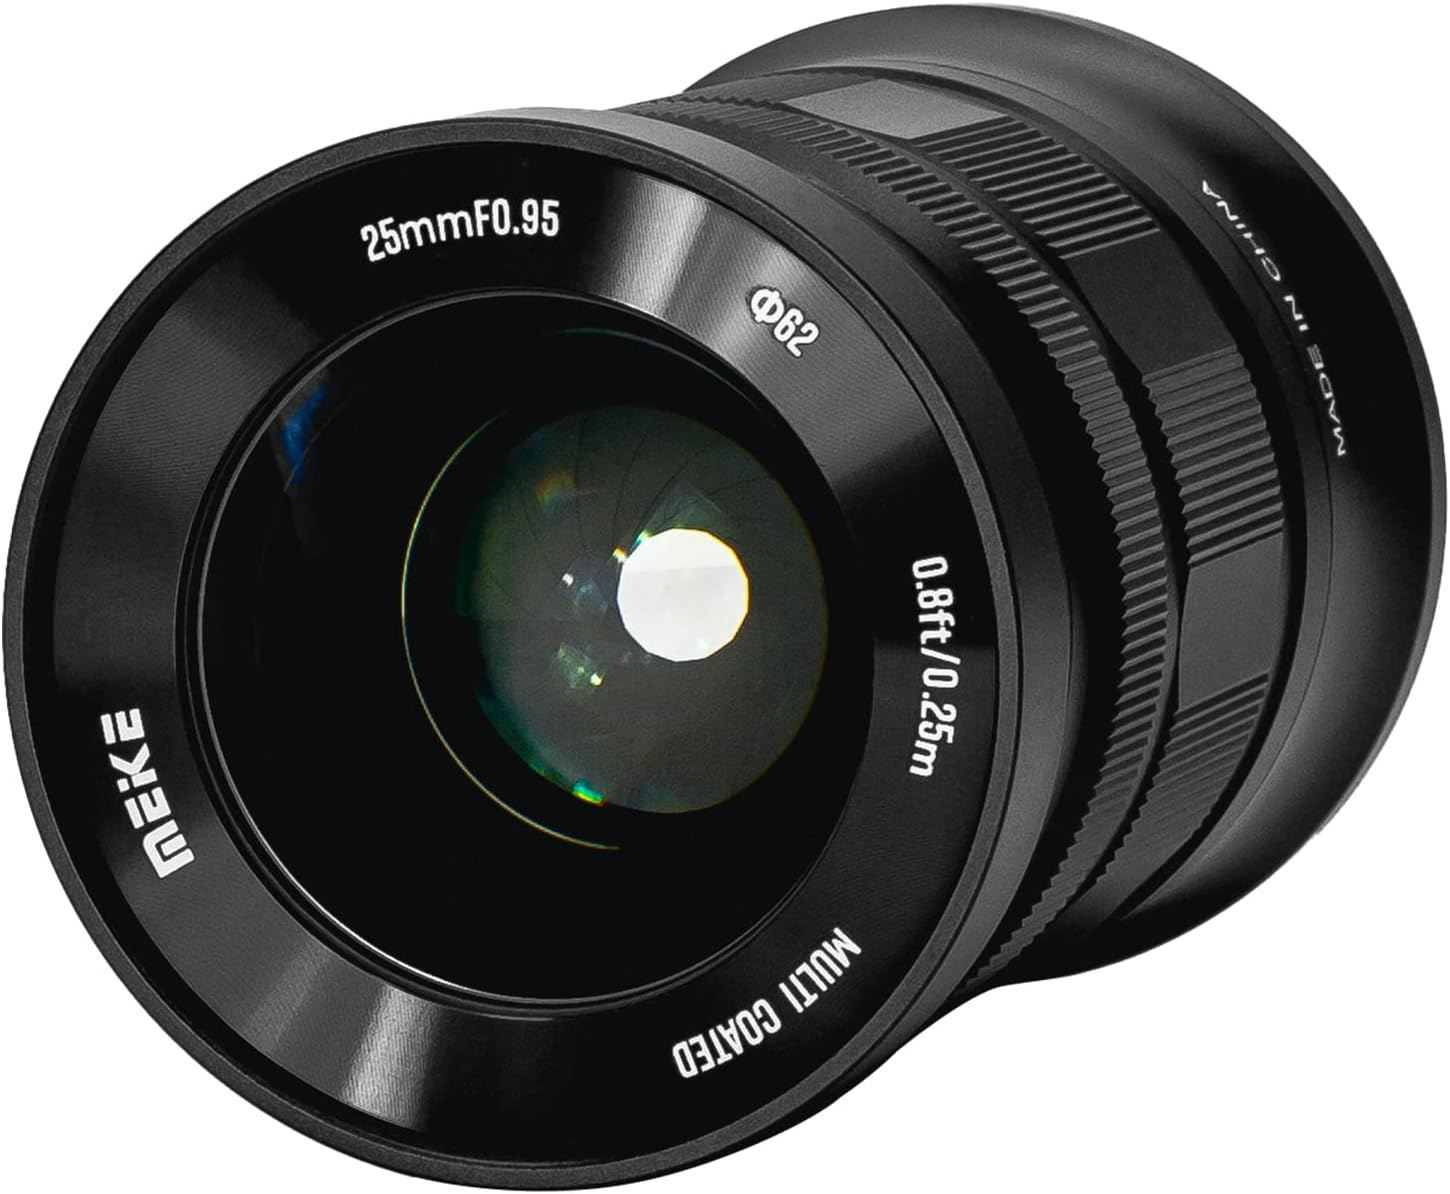 Meike 25mm F0.95 Lens for Sony E